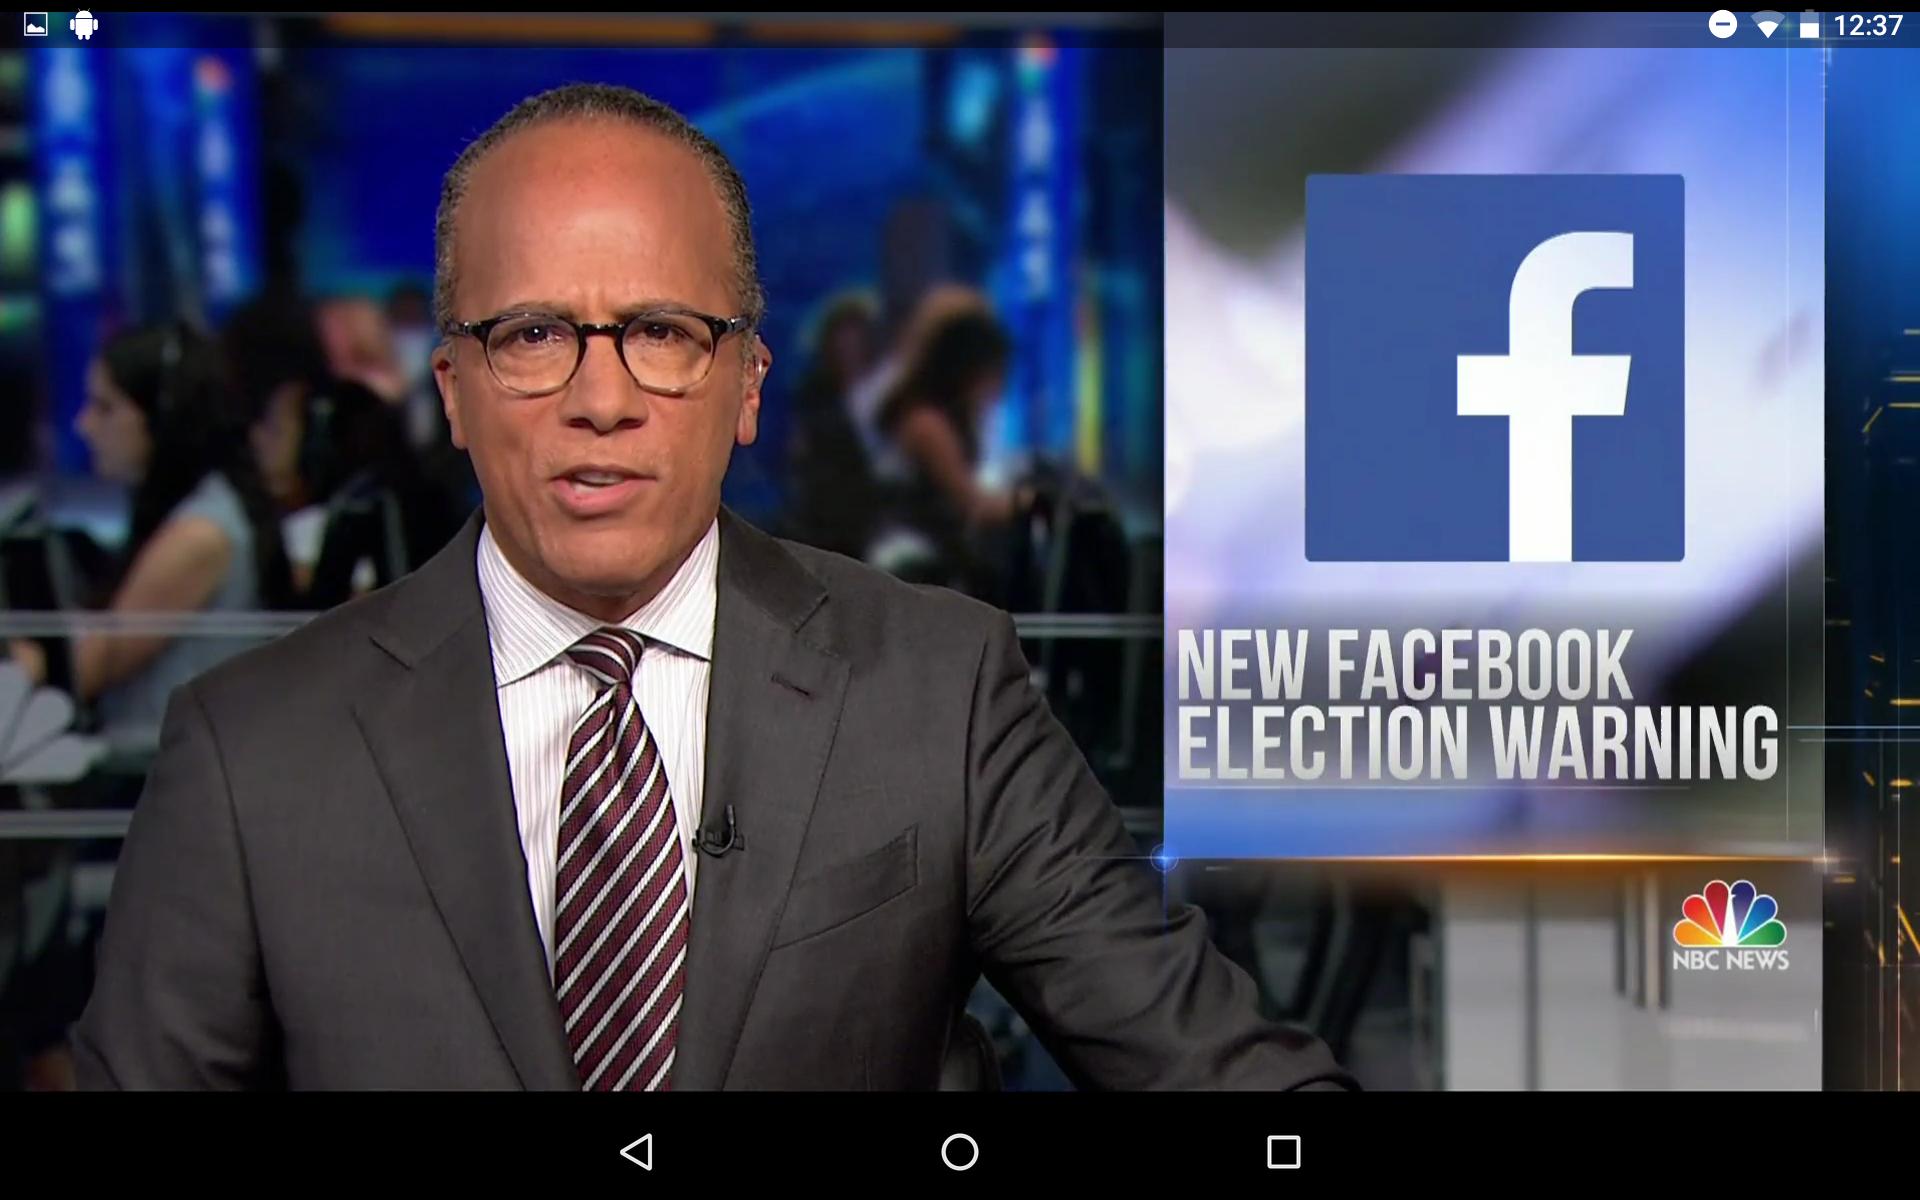 NBC News: Breaking News, US News & Live Video 6.0.11 Screenshot 16